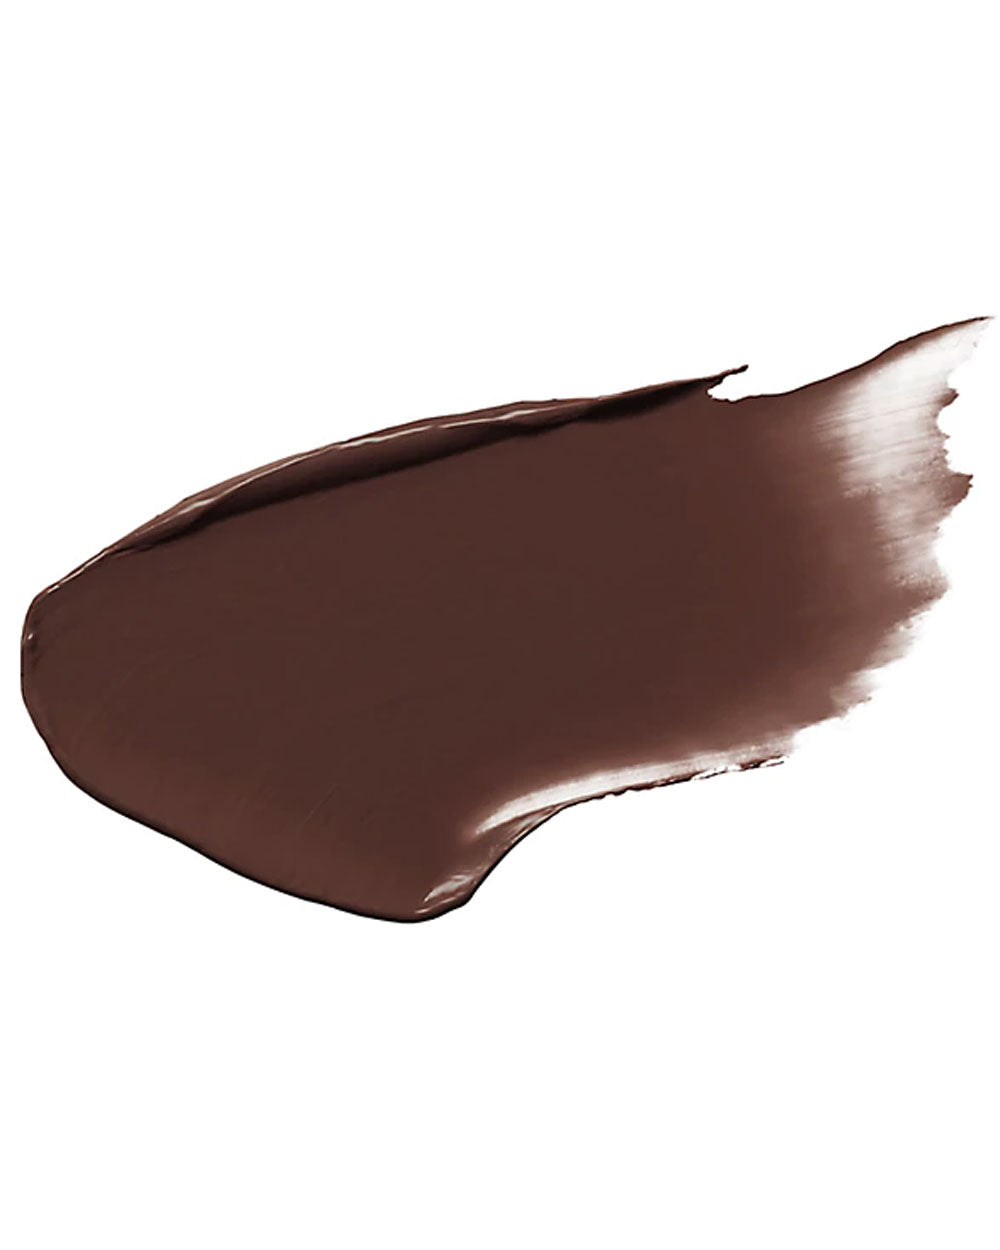 Rouge Essentiel Silky Creme Lipstick in Chocolate